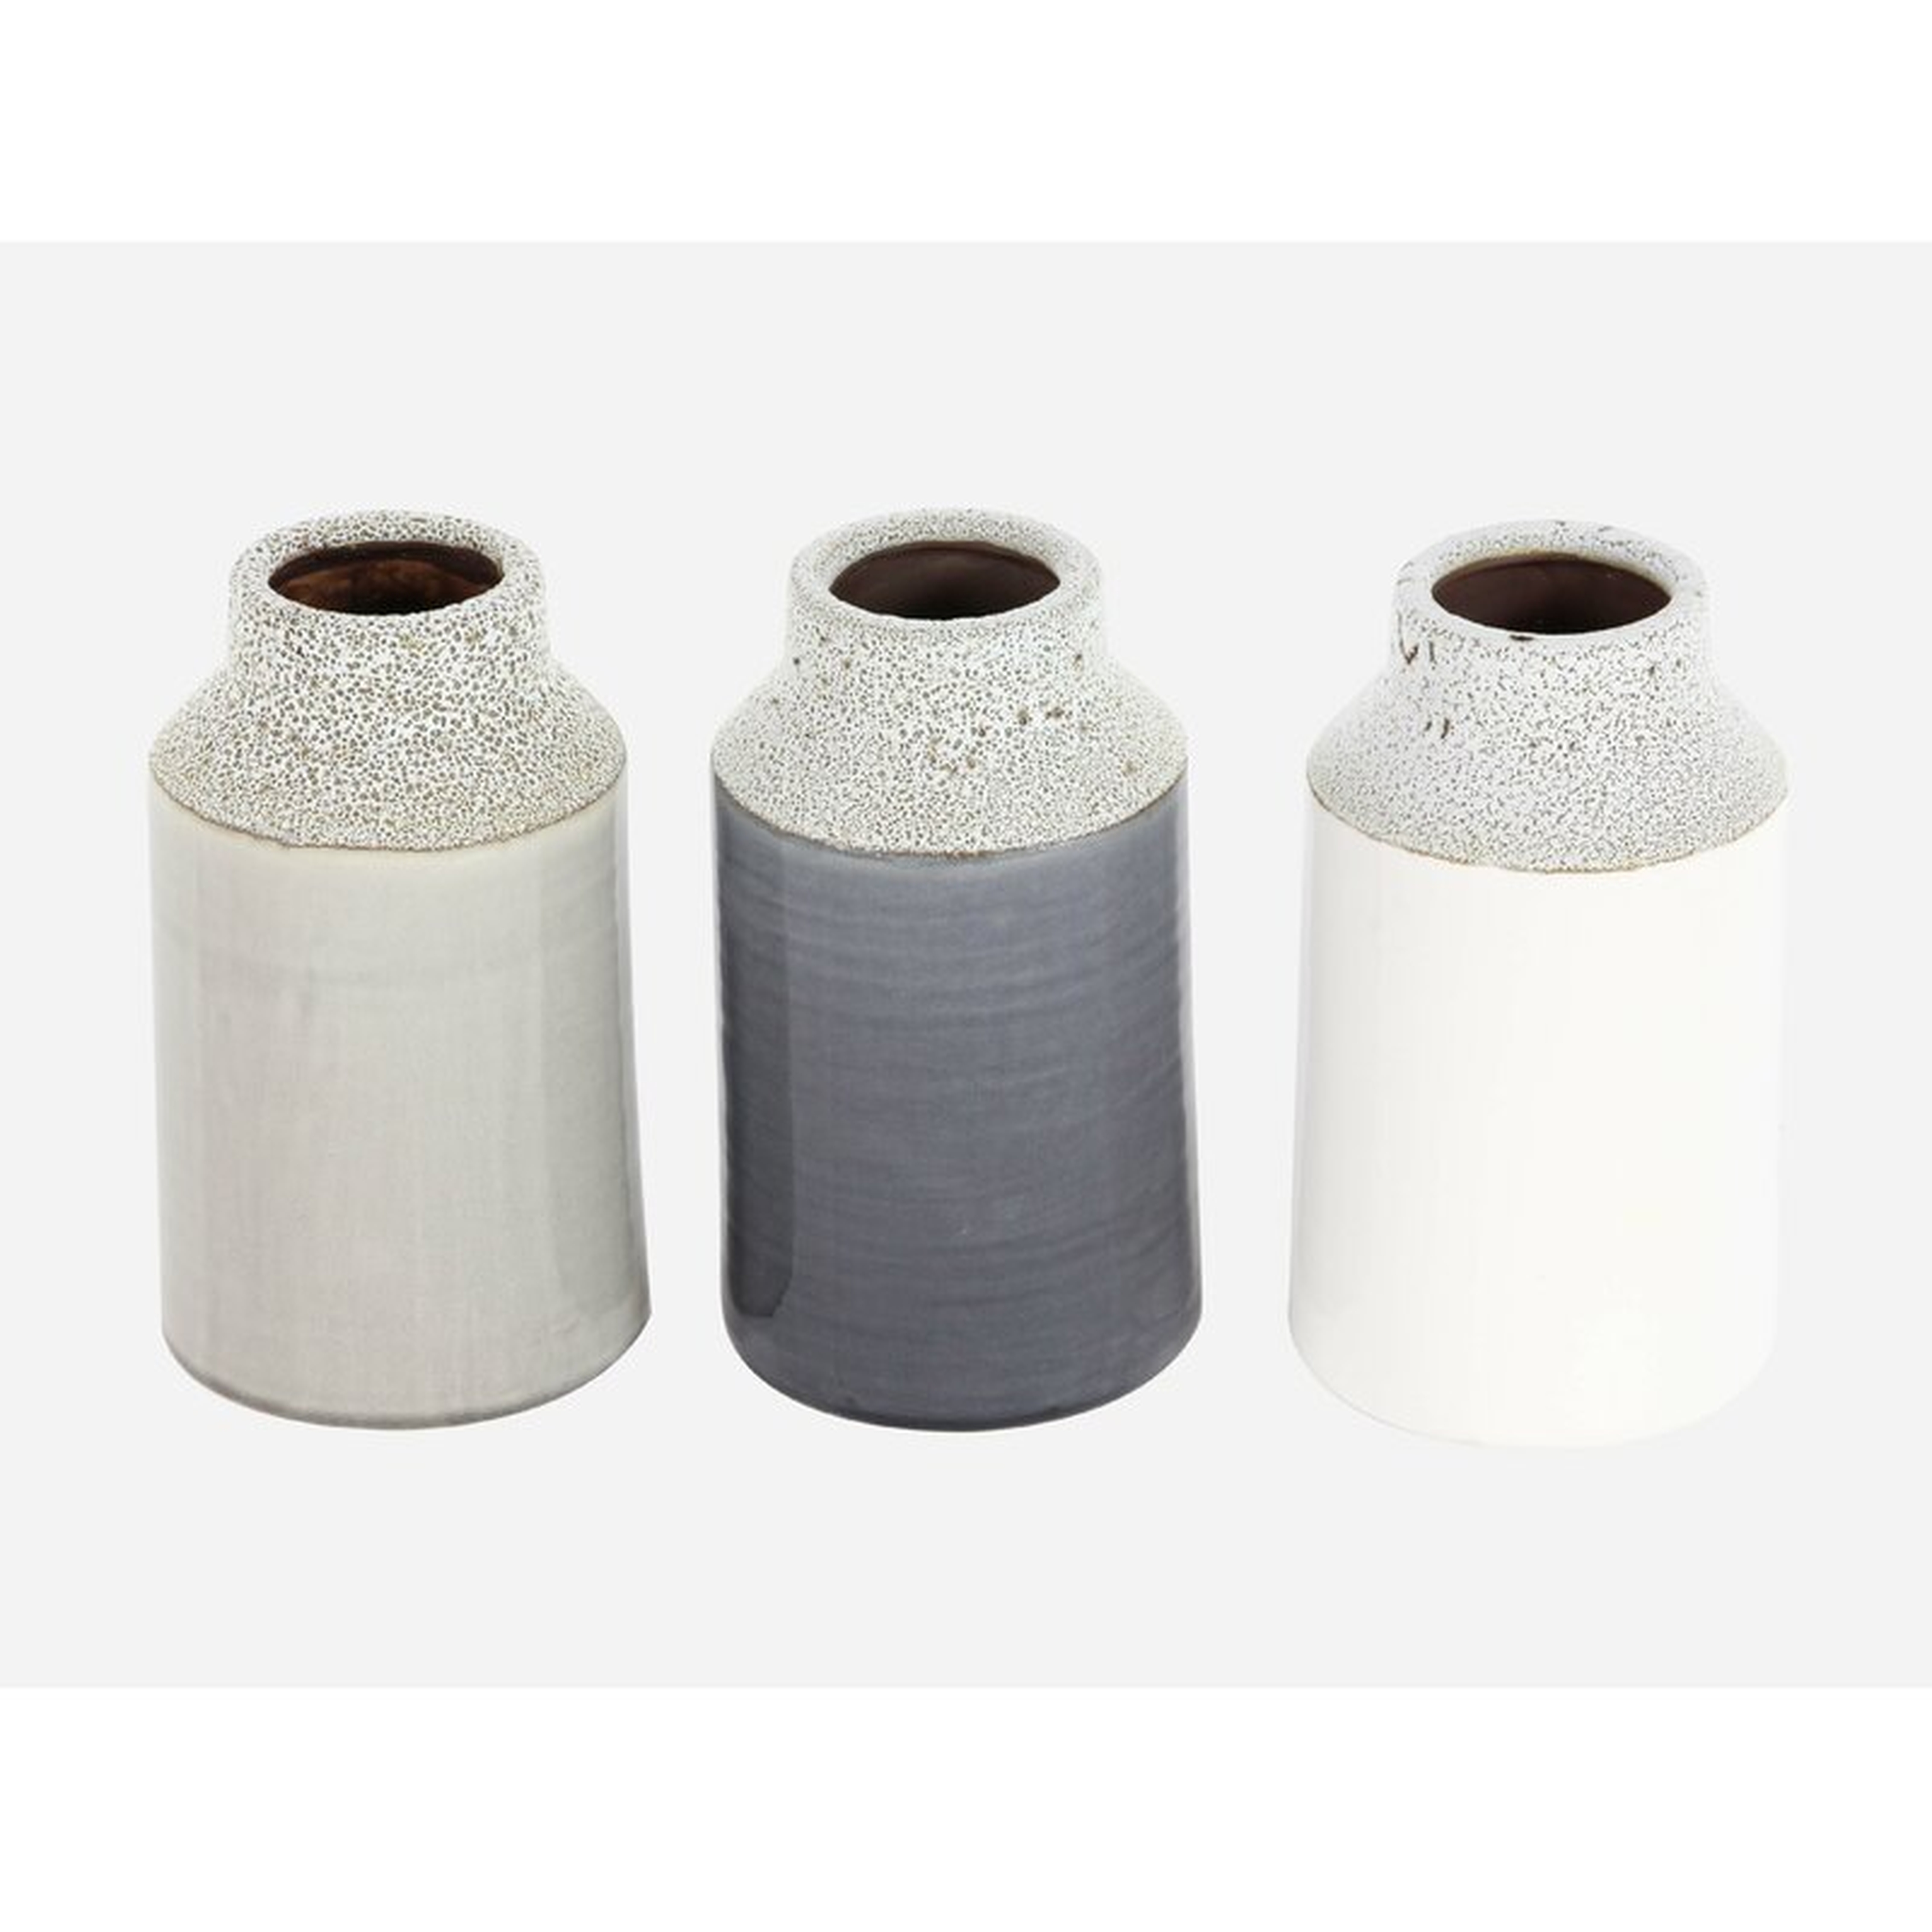 Baldric Ceramic Table Vase (Set of 3) - Wayfair